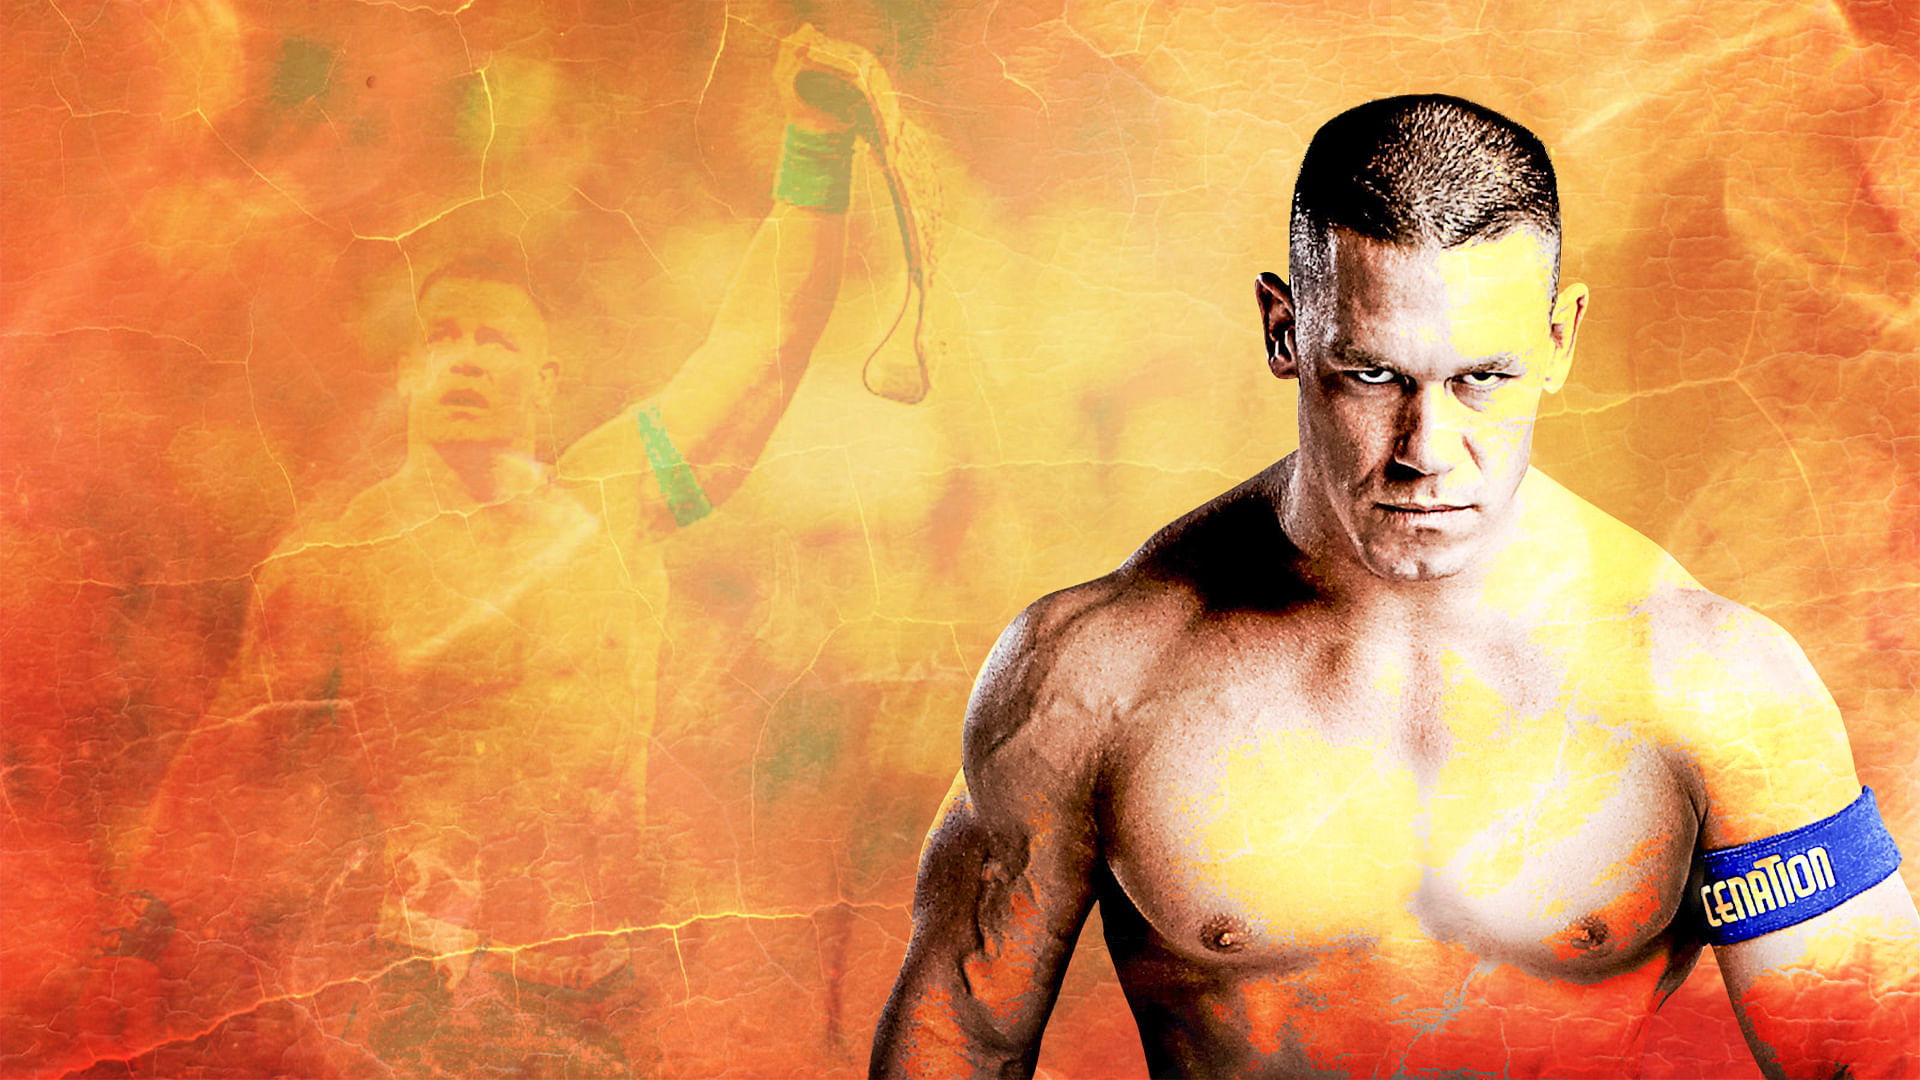 John Cena Wallpapers: 10 must downloads